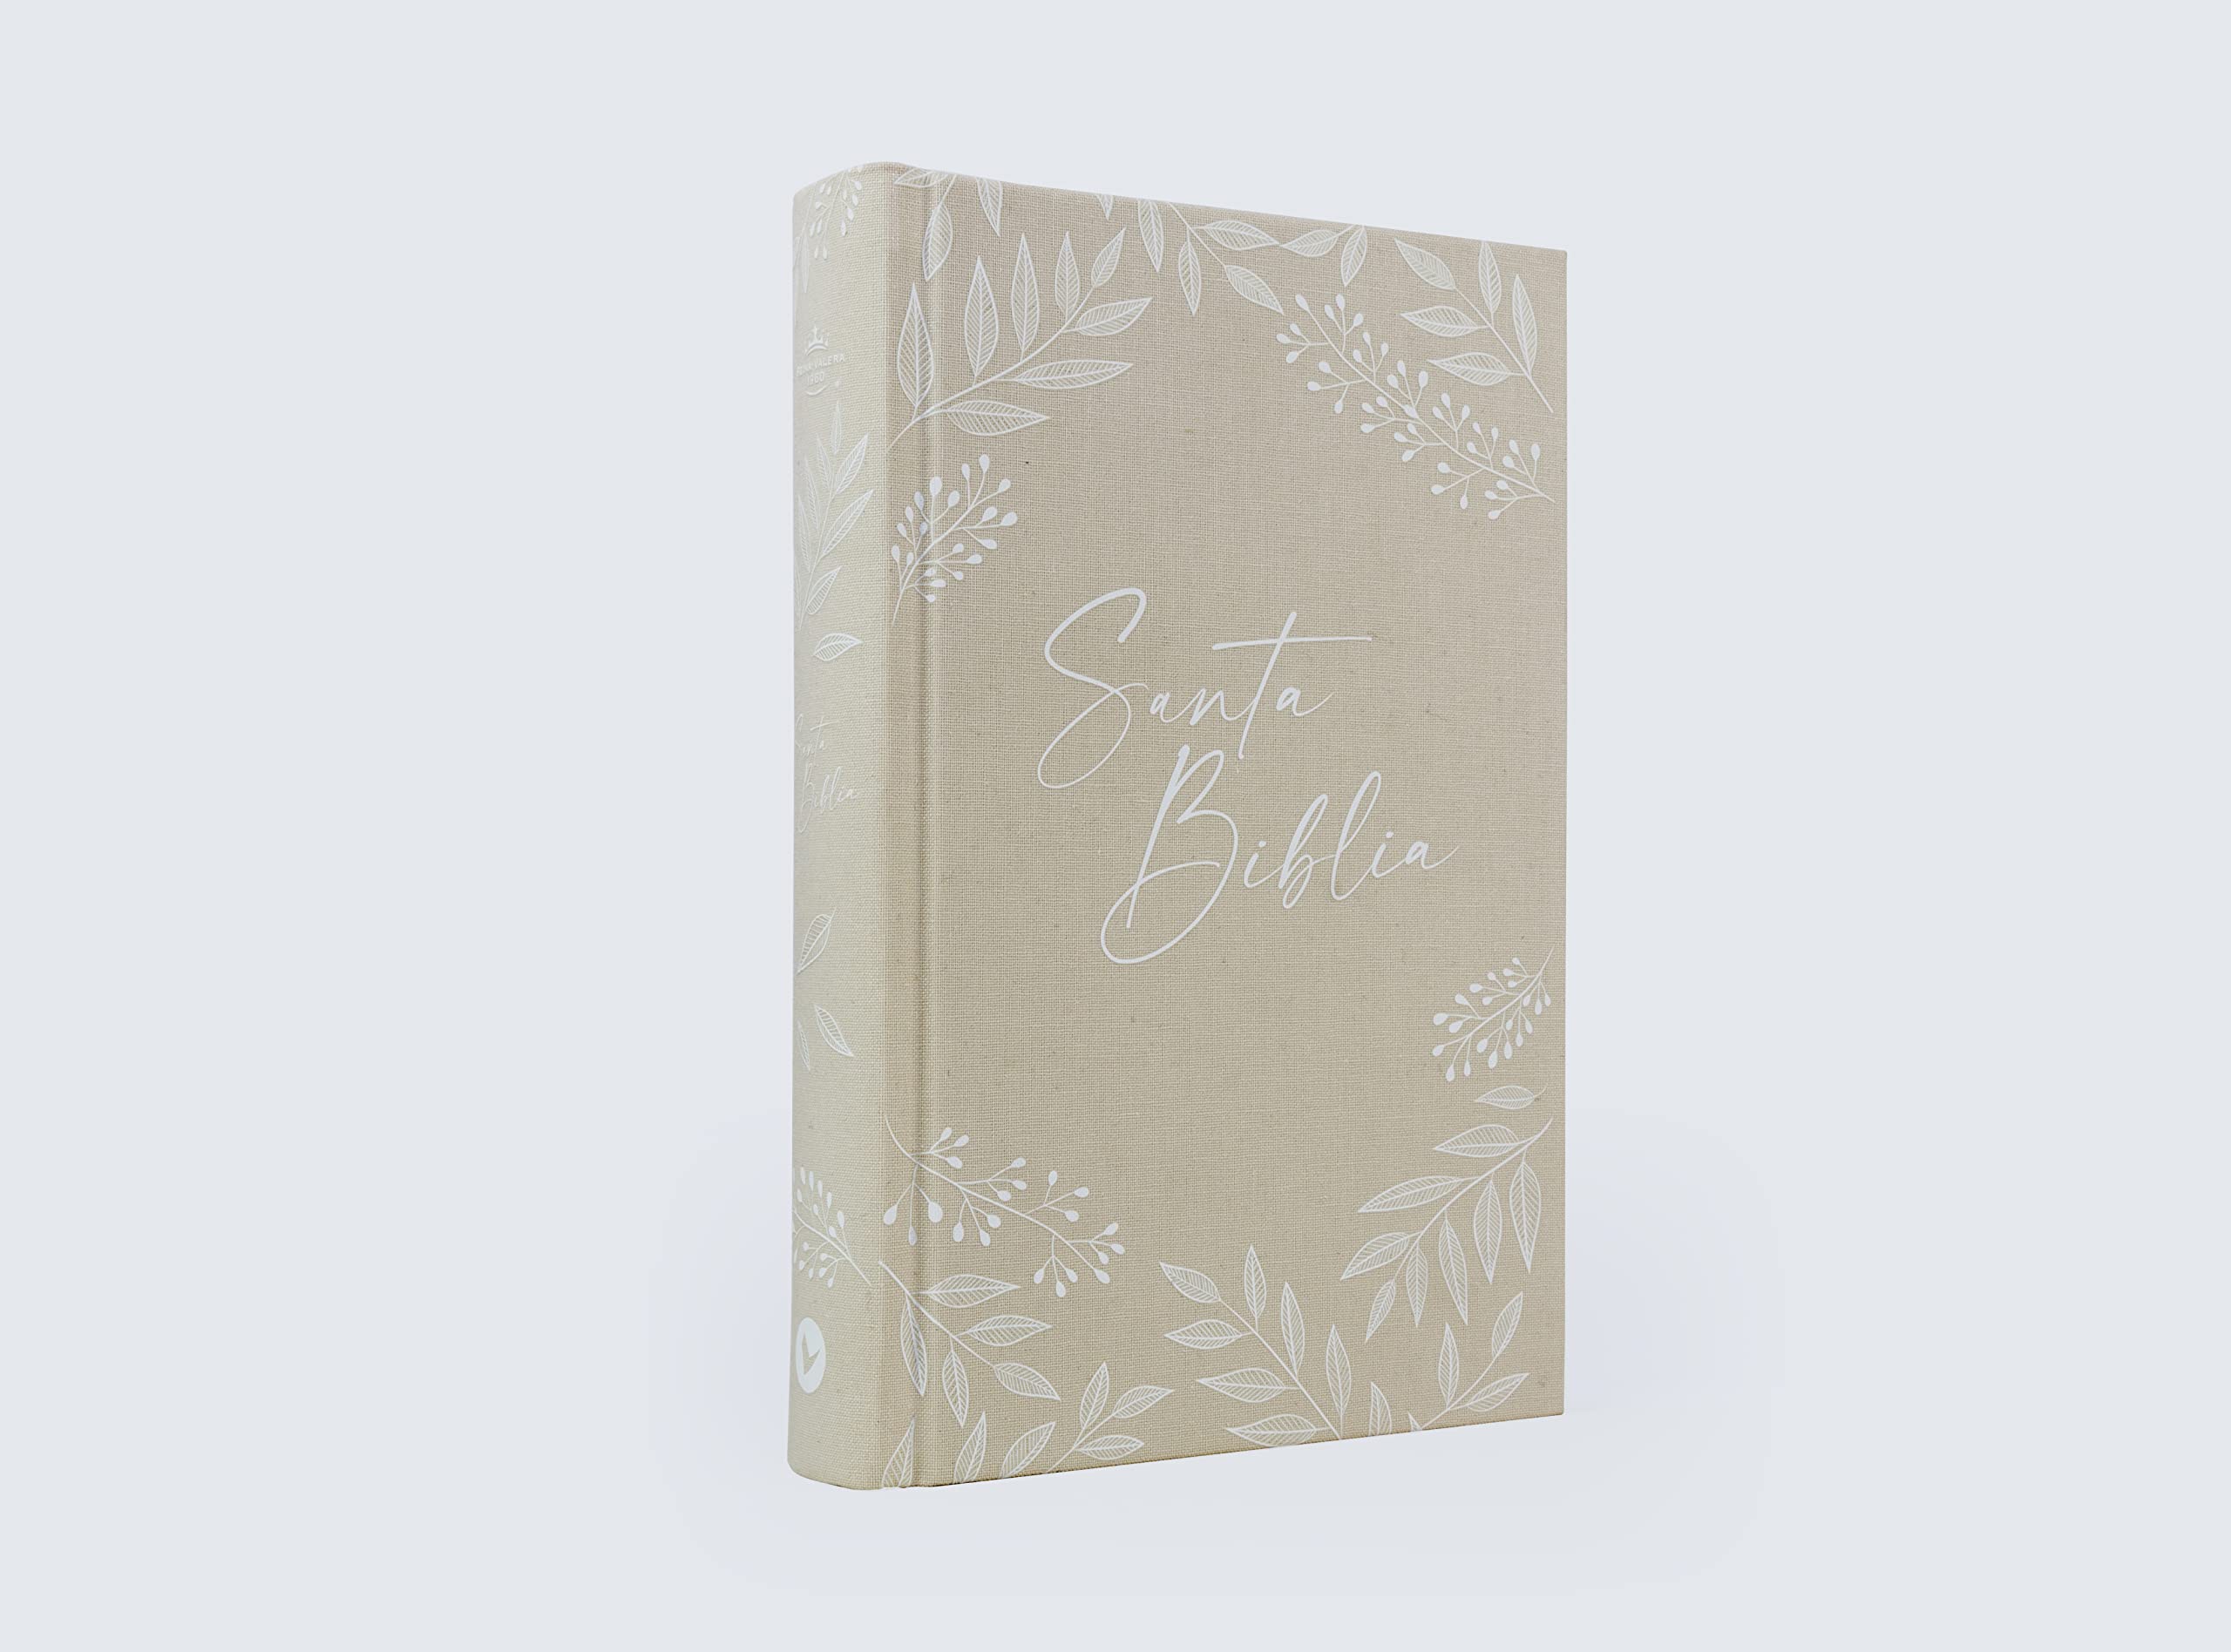 Reina-Valera 1960 Biblia para bodas, Tapa dura en tela, Caja de regalo (Spanish Edition)